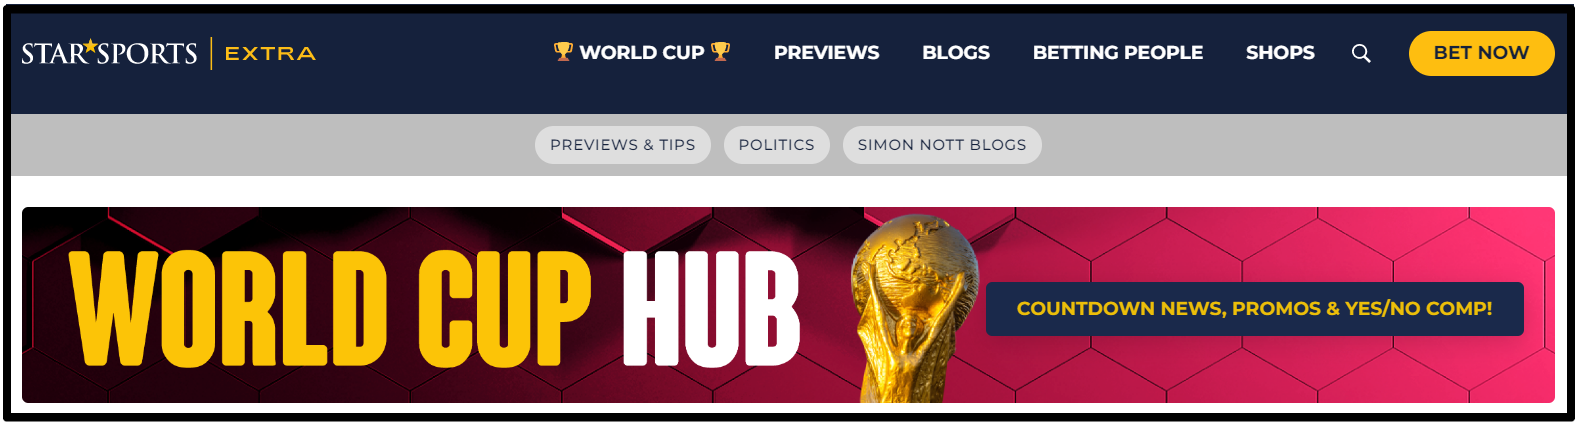 Star Sports World Cup betting hub.